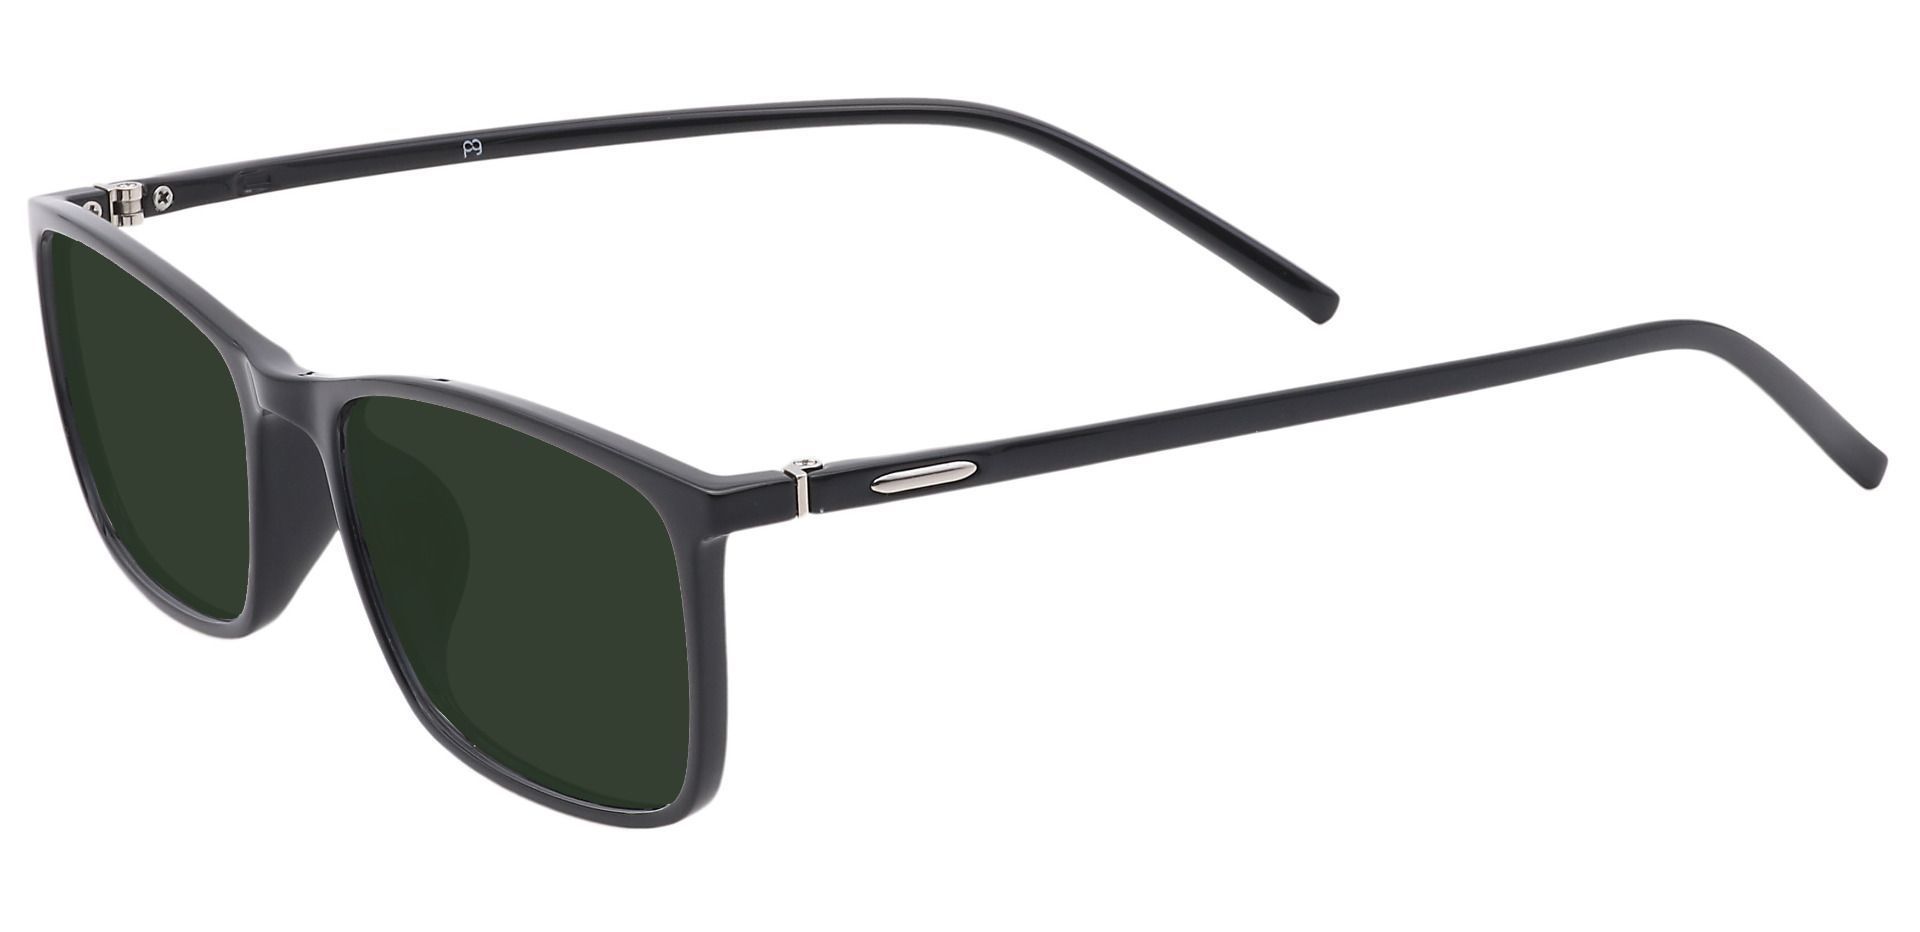 Fuji Rectangle Prescription Sunglasses - Black Frame With Green Lenses